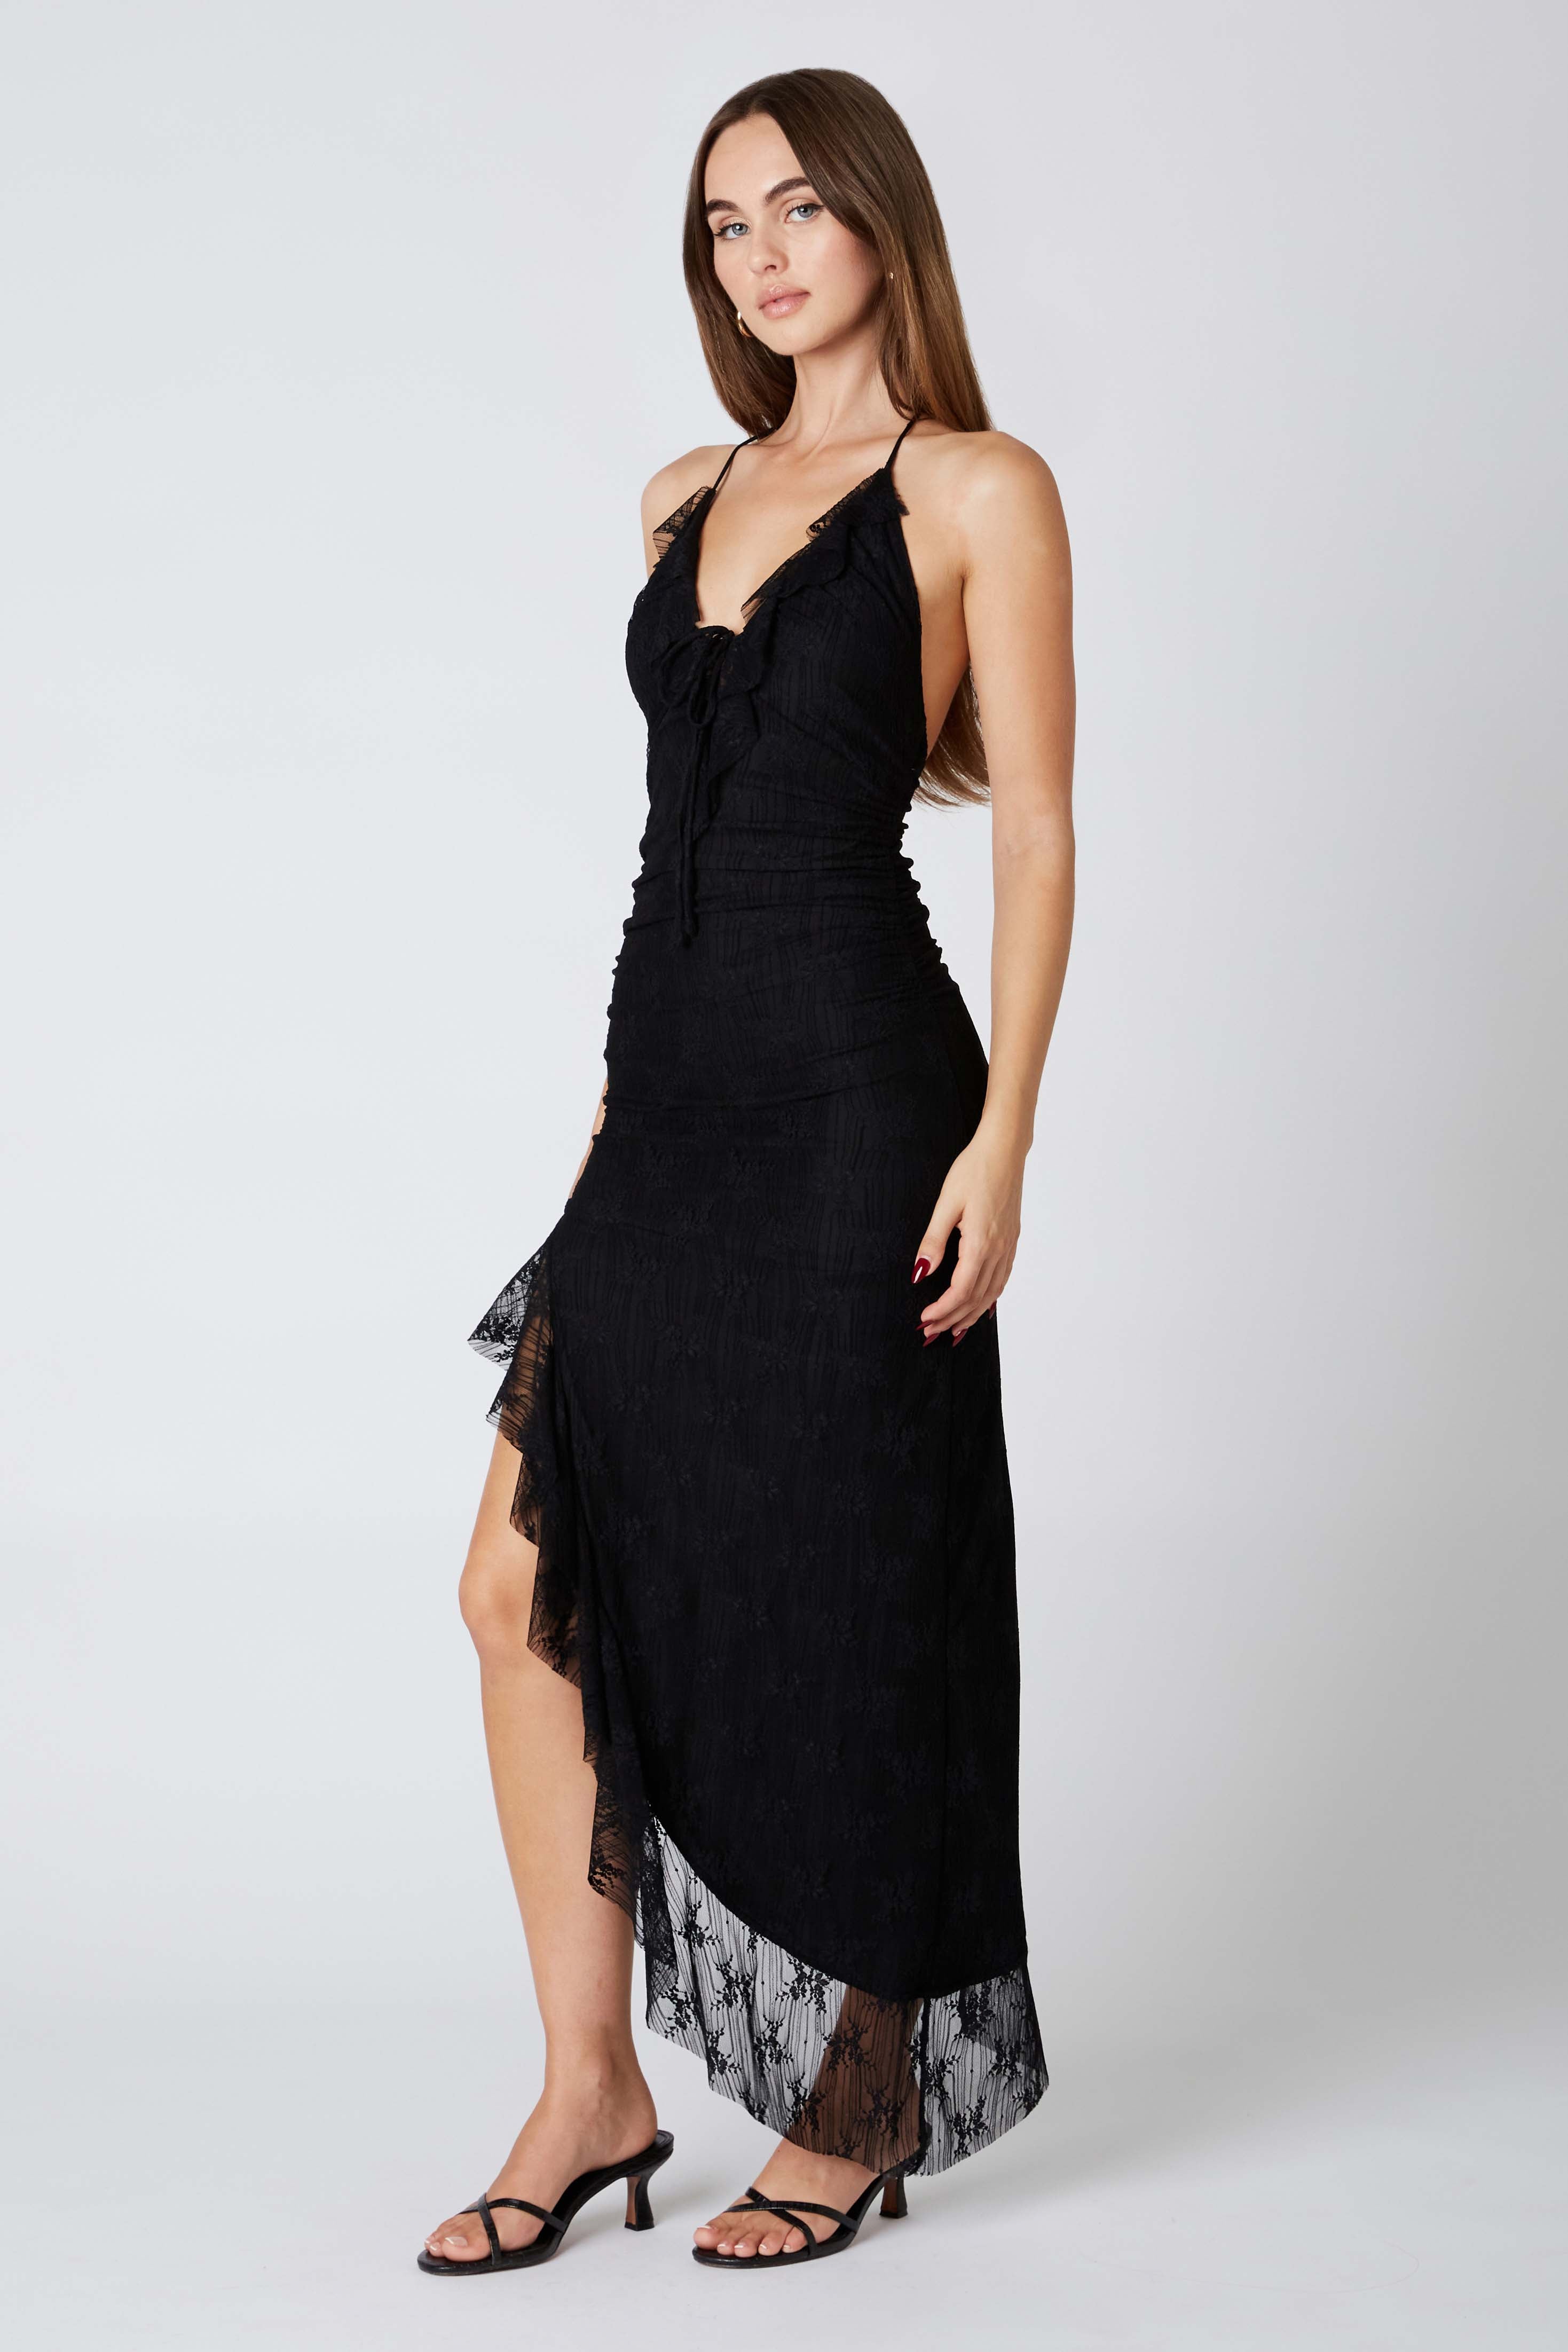 Lace Halter Asymmetrical Midi Dress in Black Side View